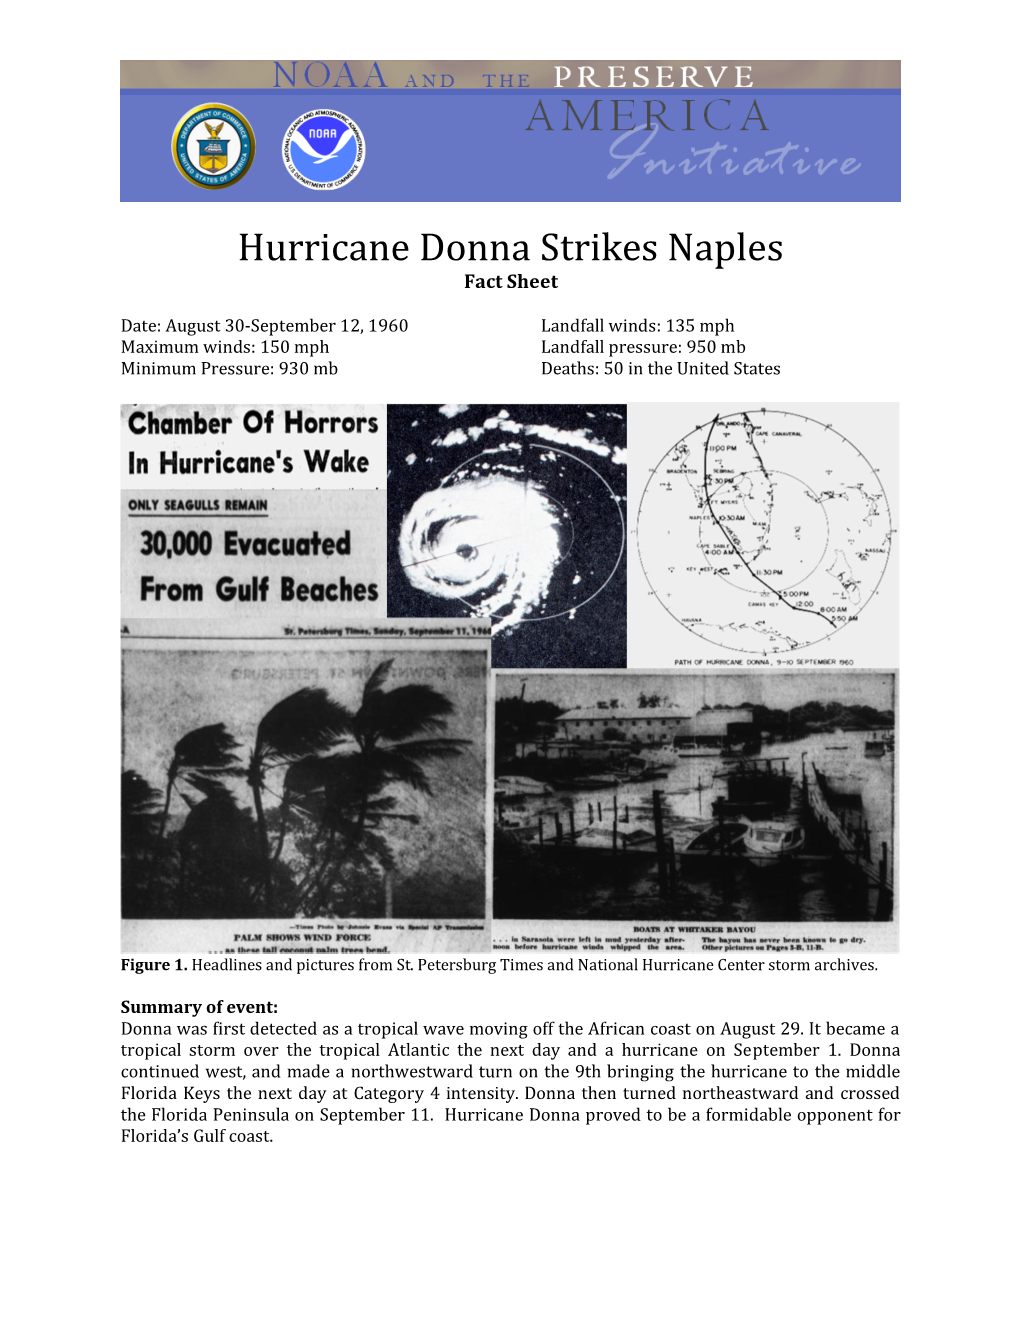 Hurricane Donna Strikes Naples Fact Sheet